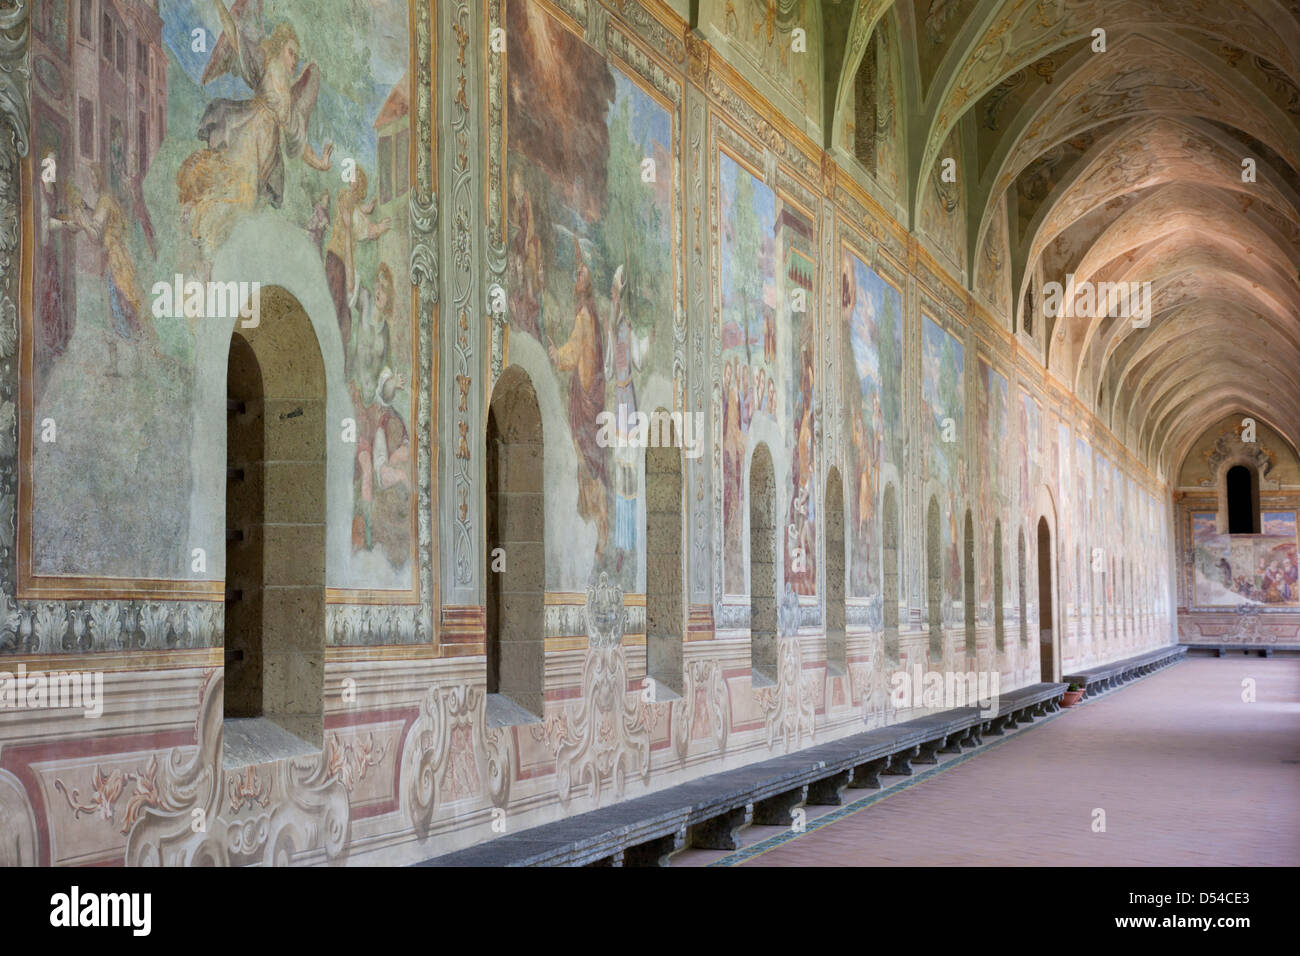 The Colourful Fresco In Santa Chiara Cloister Naples Italy Stock